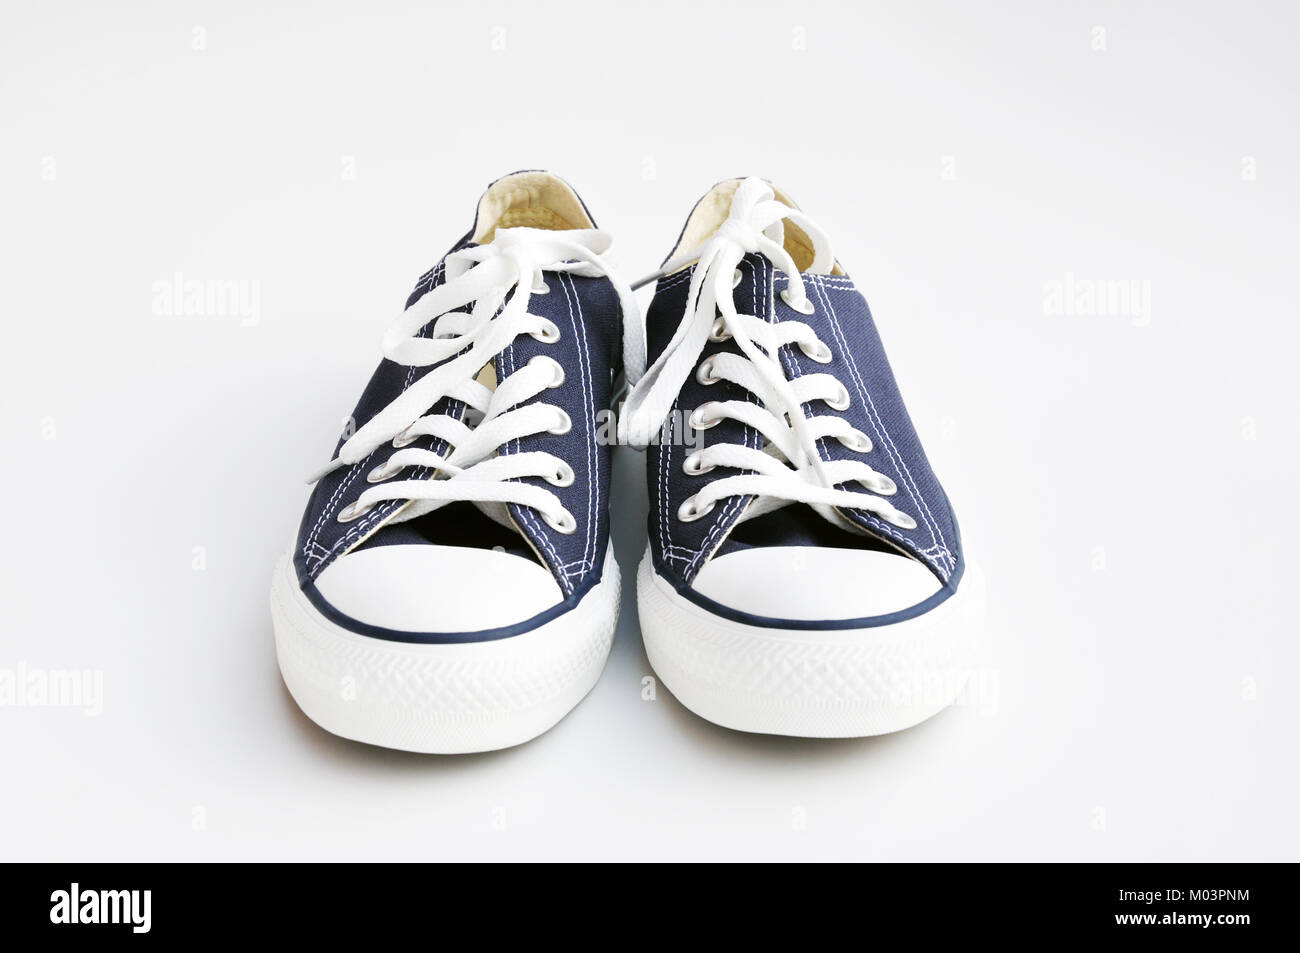 Converse shoes Stock Photo